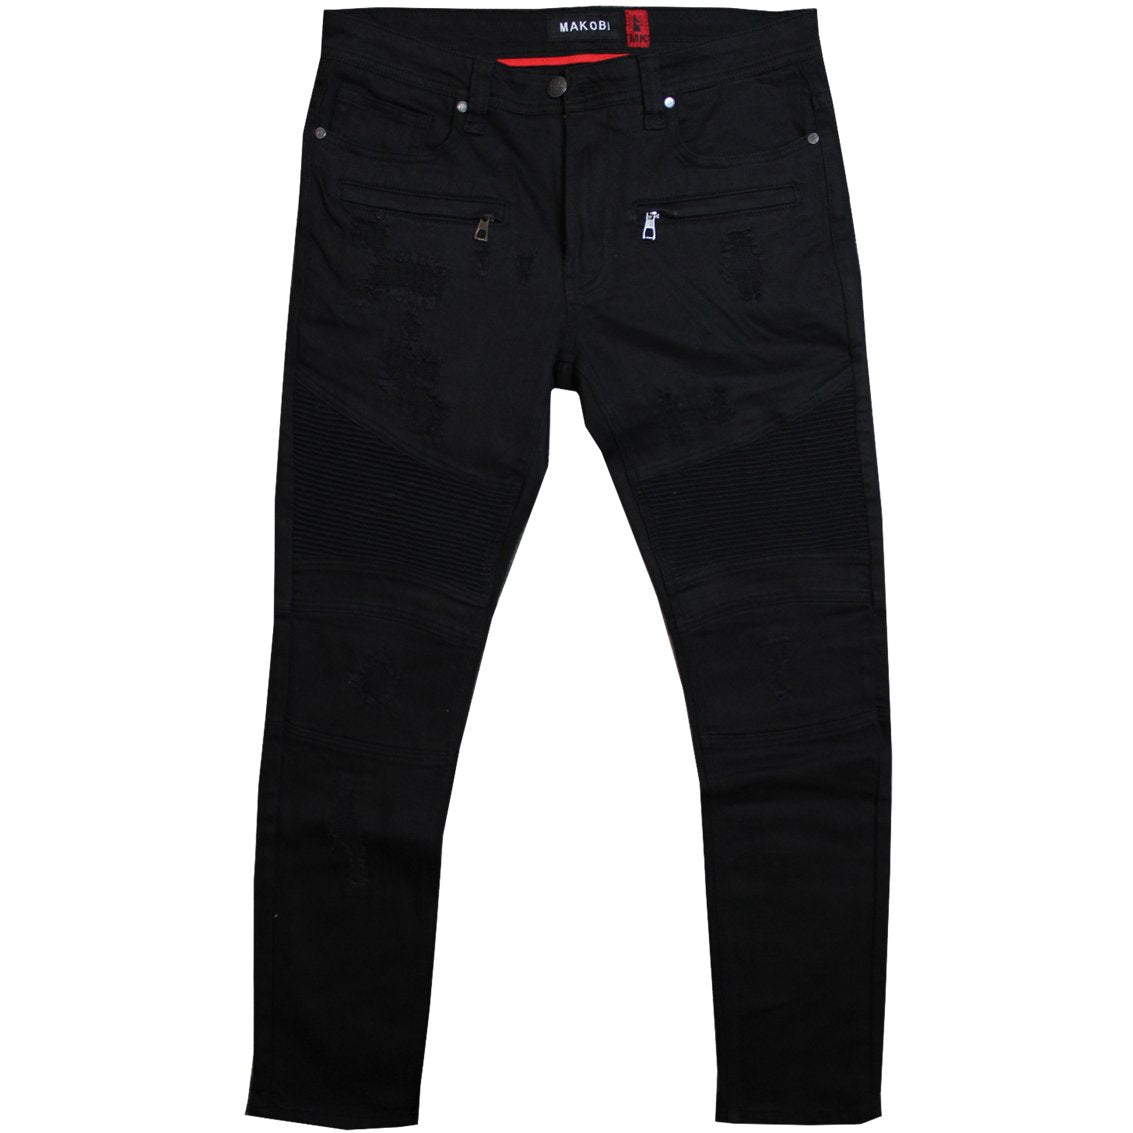 M1786 Makobi Prado Biker Jeans pẹlu Rip & Tunṣe - Black / Black